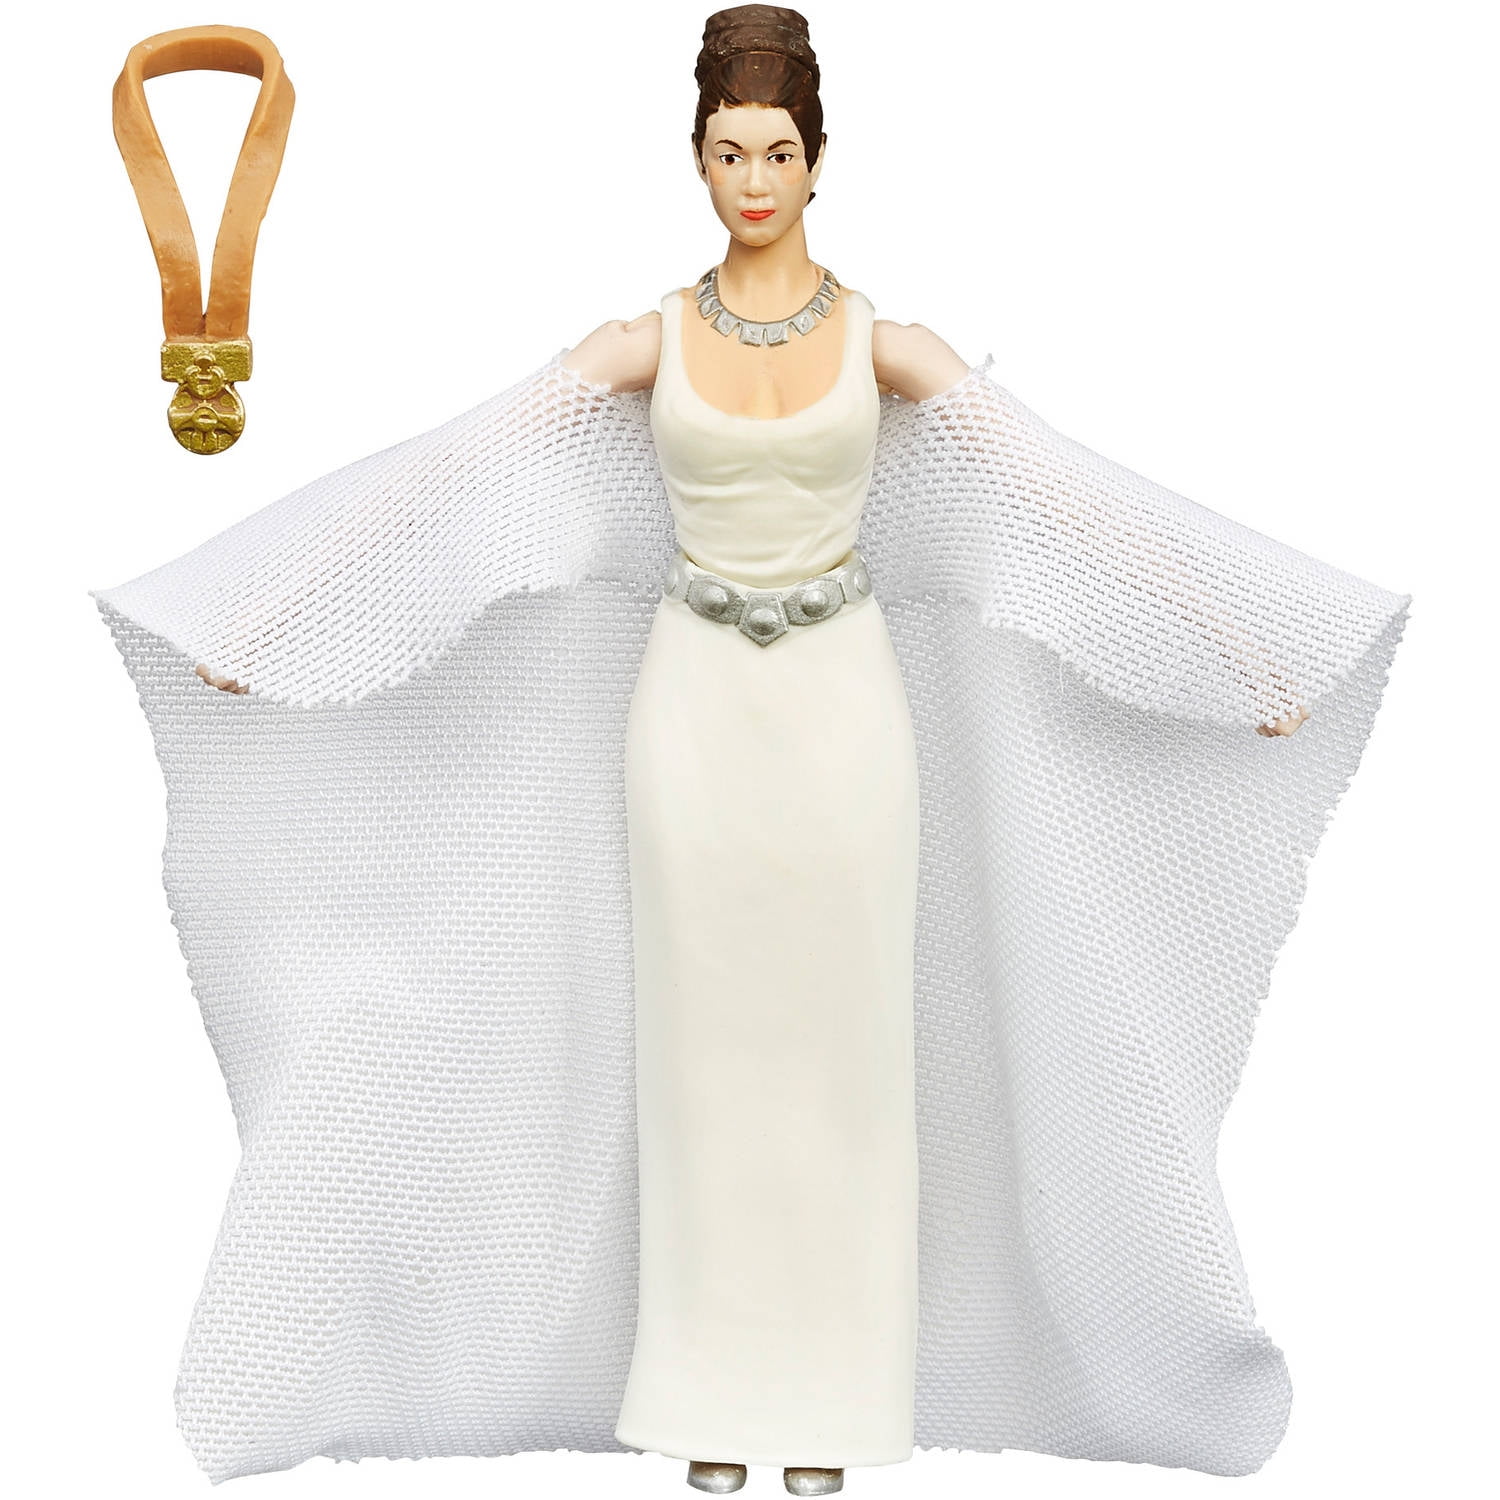 Star Wars PRINCESS LEIA ORGANA 2015 RETURN OF THE JEDI 3.75'' figure Toy Gift 